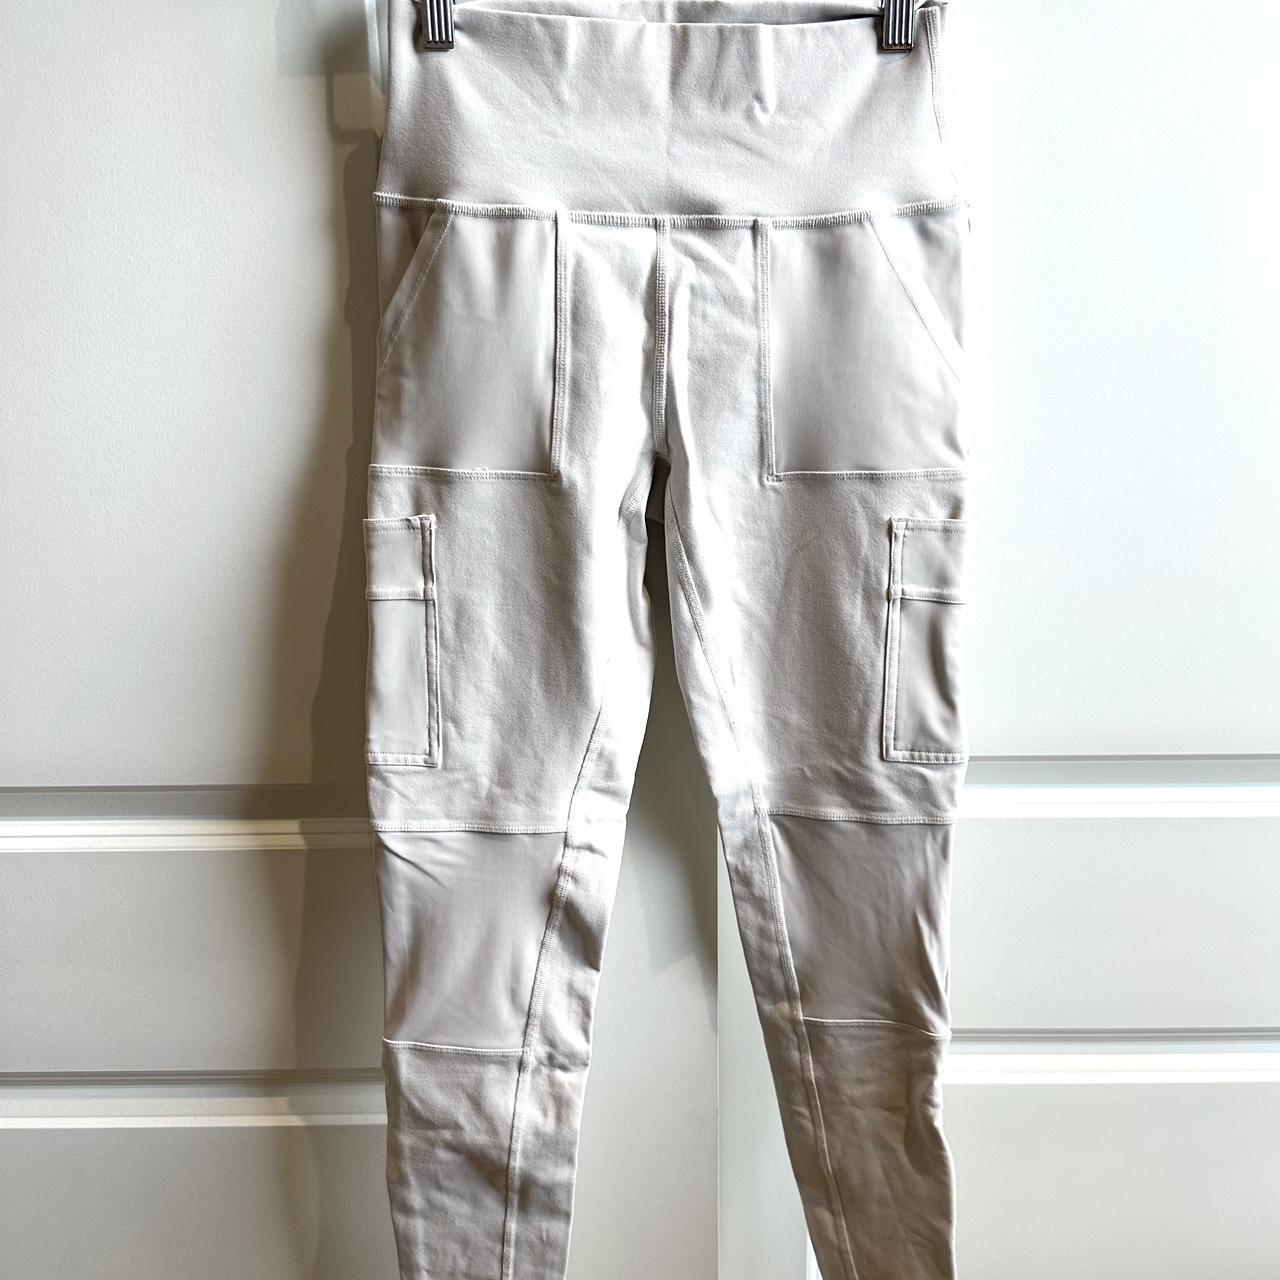 Alo cargo leggings RN#87370. Size Medium. Color - Depop